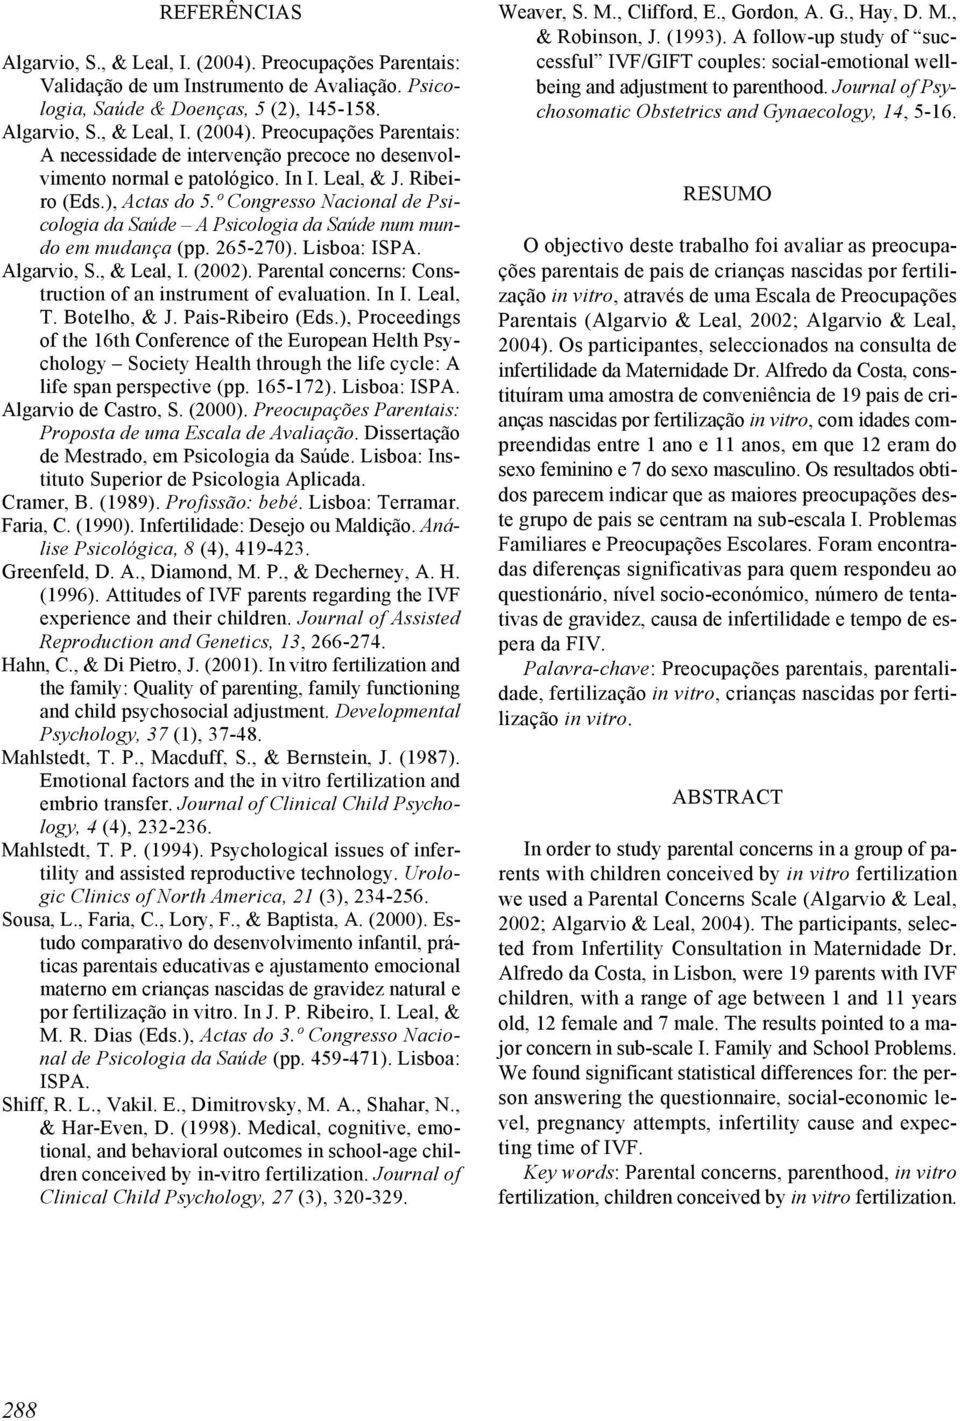 Parental concerns: Construction of an instrument of evaluation. In I. Leal, T. Botelho, & J. Pais-Ribeiro (Eds.